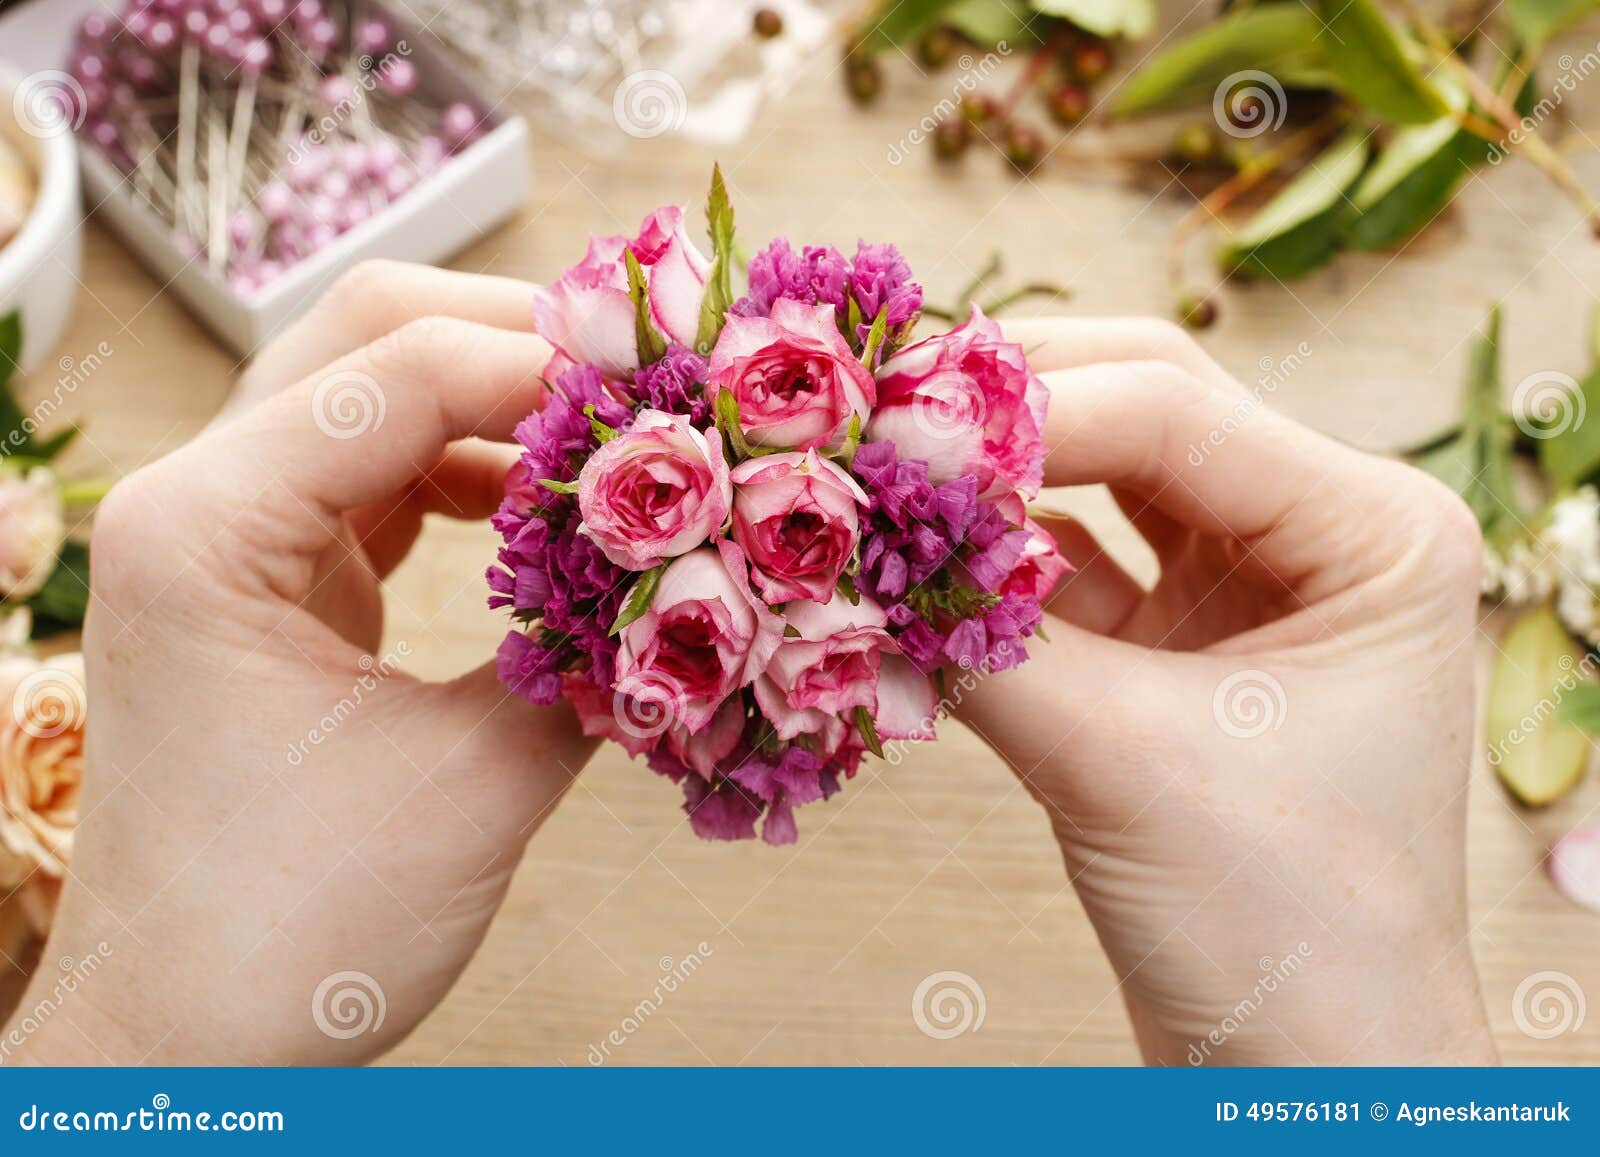 steps making wrist corsage florist work woman beautiful bouquet pink roses 49576181